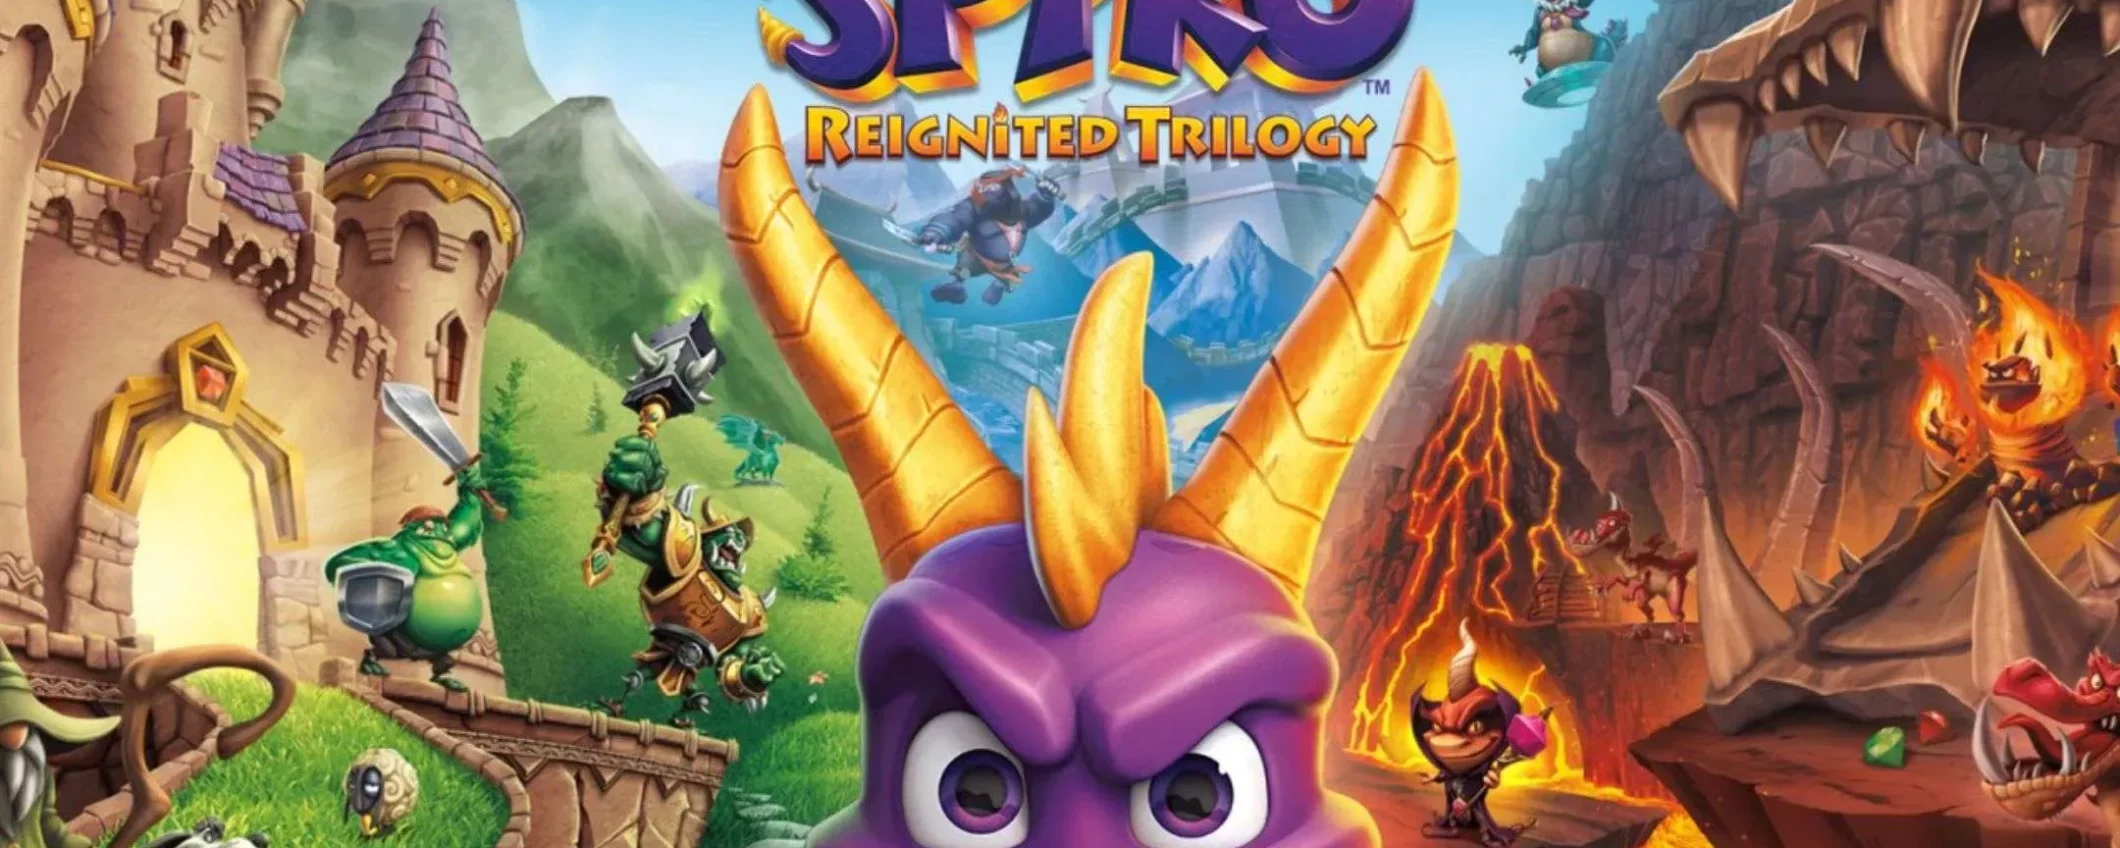 Spyro Reignited Trilogy (Nintendo Switch): costa POCHISSIMO su Amazon